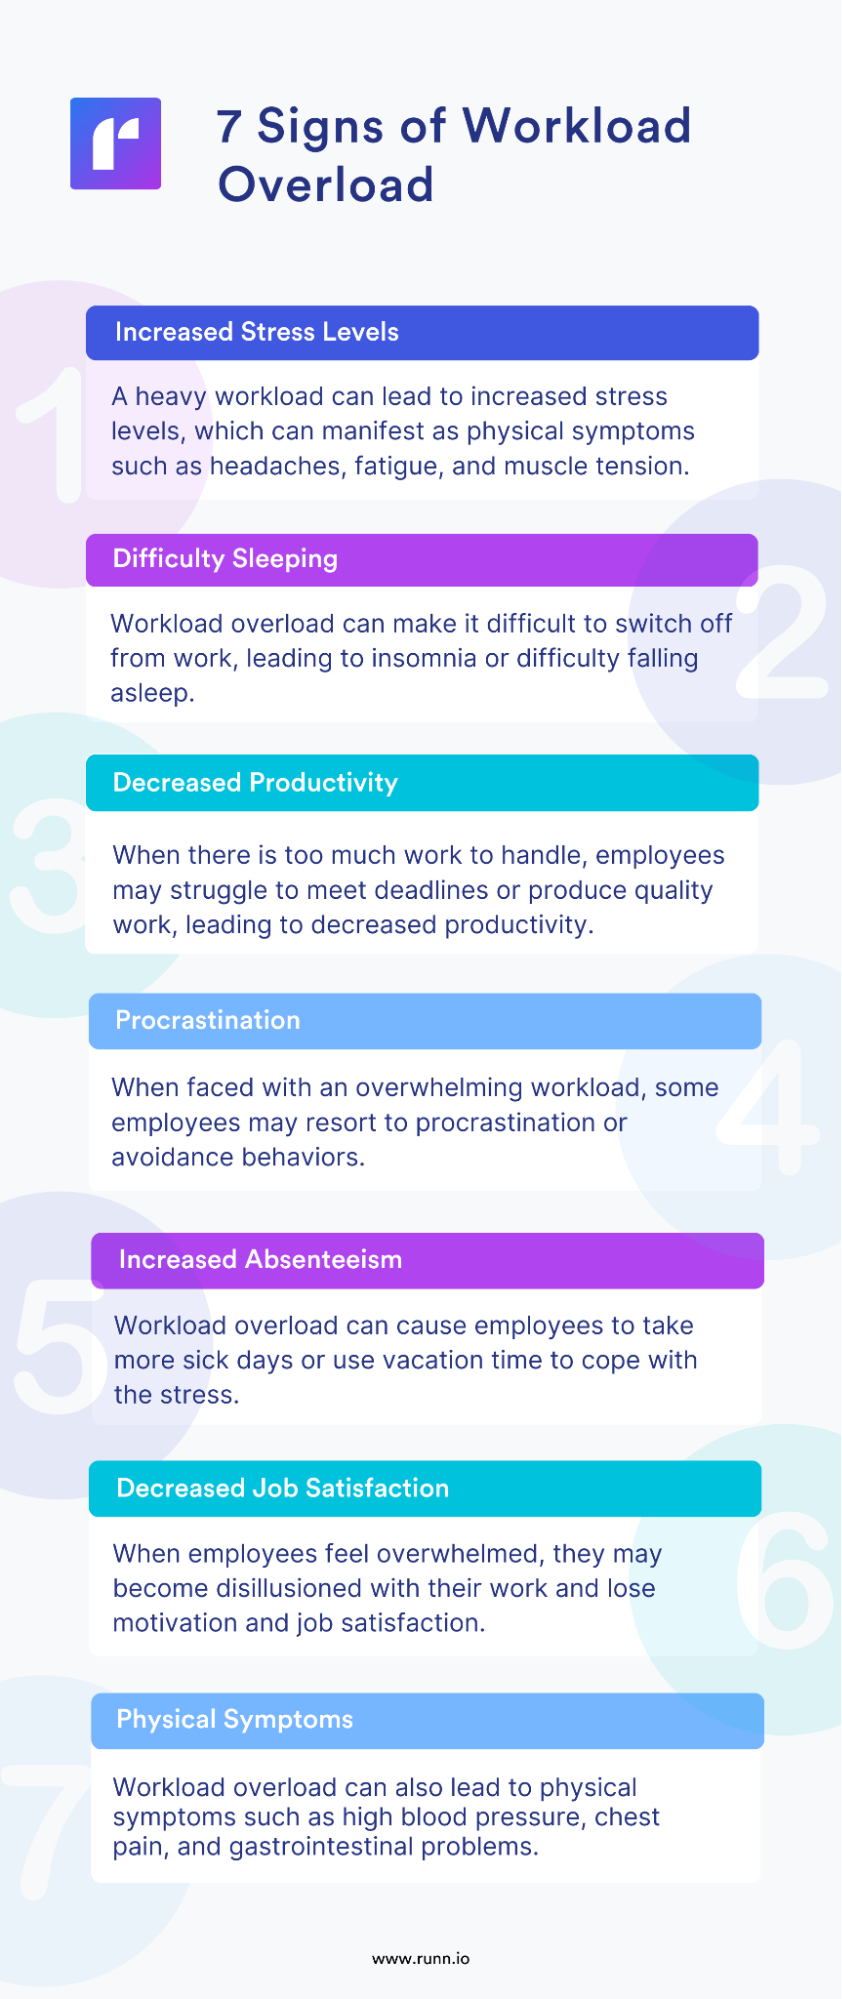 7 Sign of workload overload